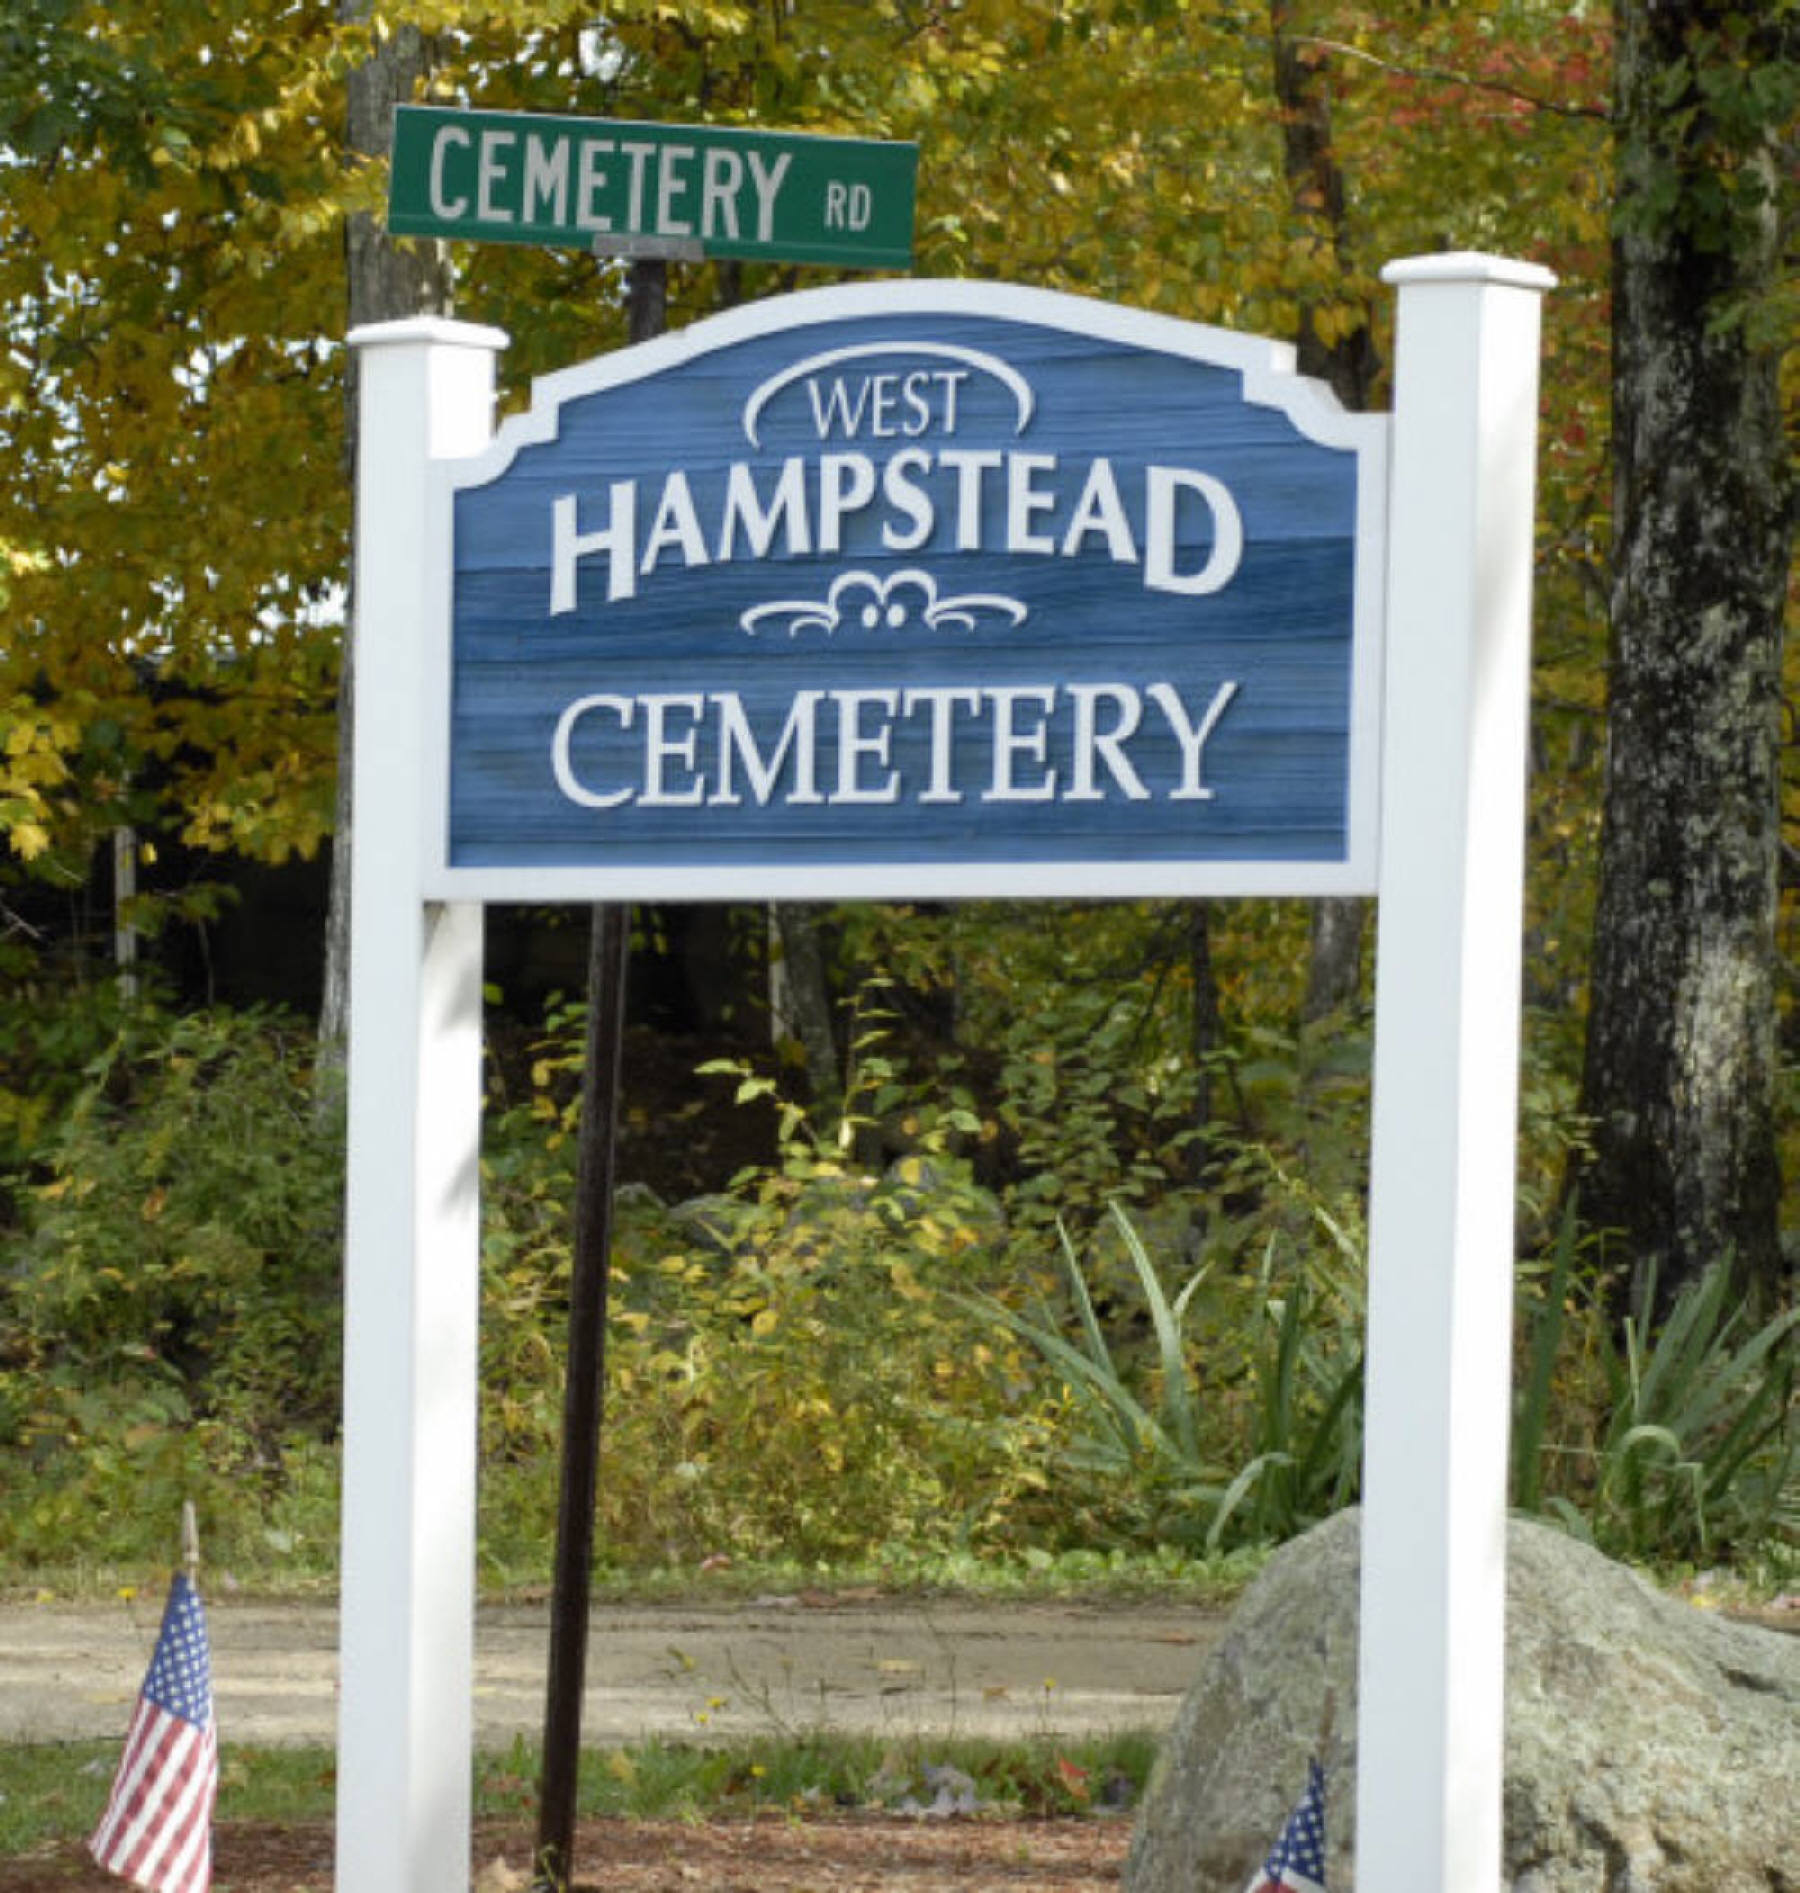 West Hampstead AKA Pine Grove Cemetery